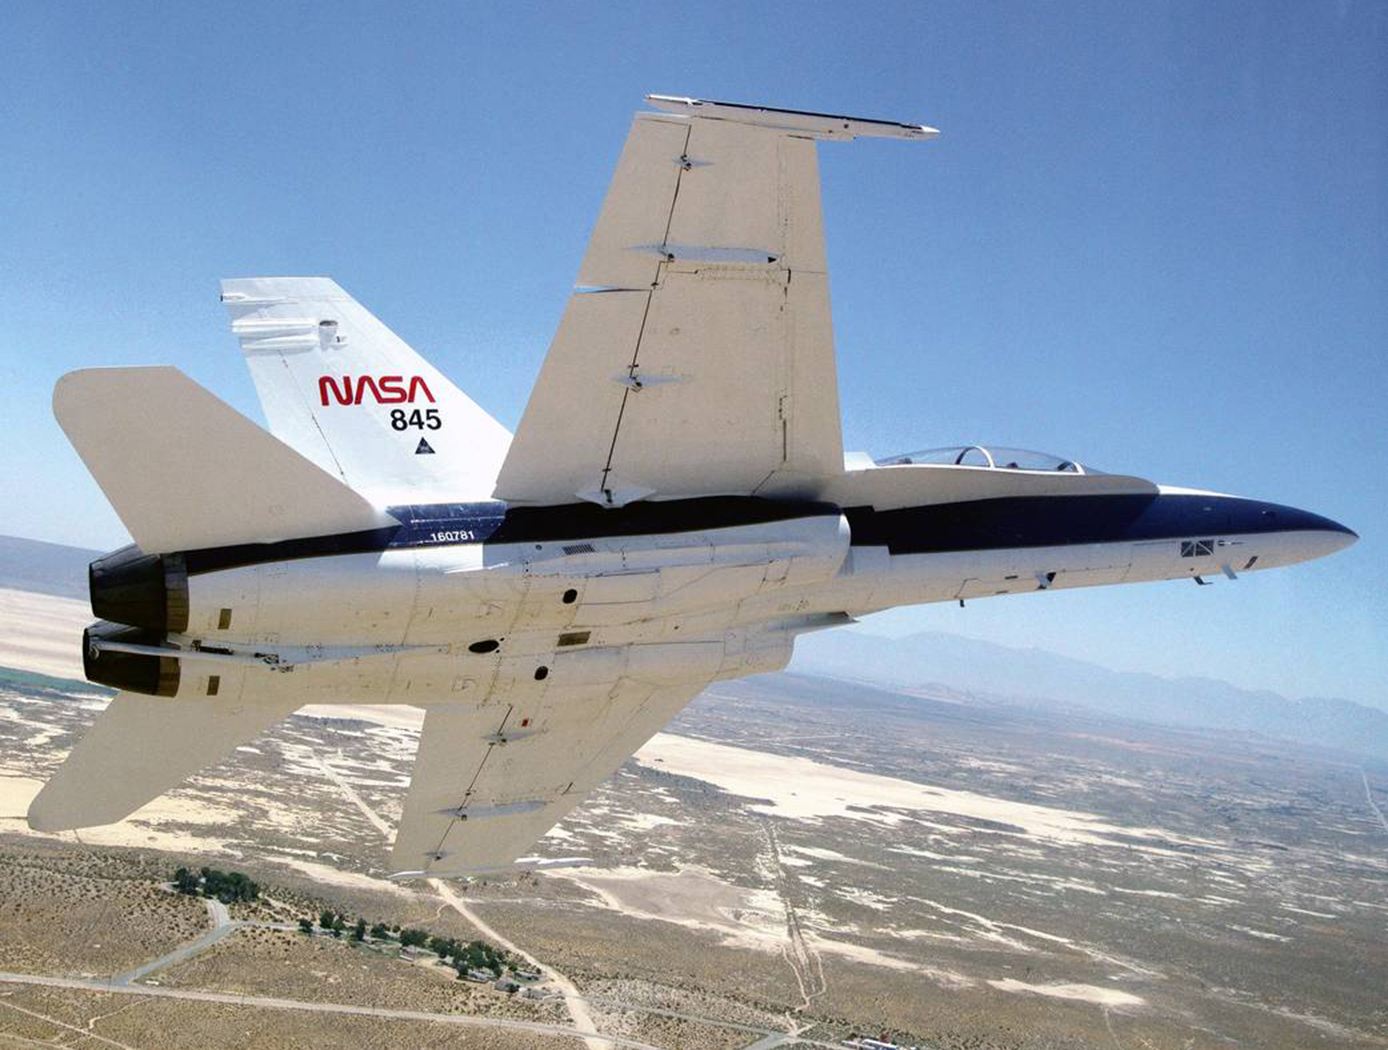 NASAs shape memory alloy actuators can reconfigure aircraft wings in flight. 